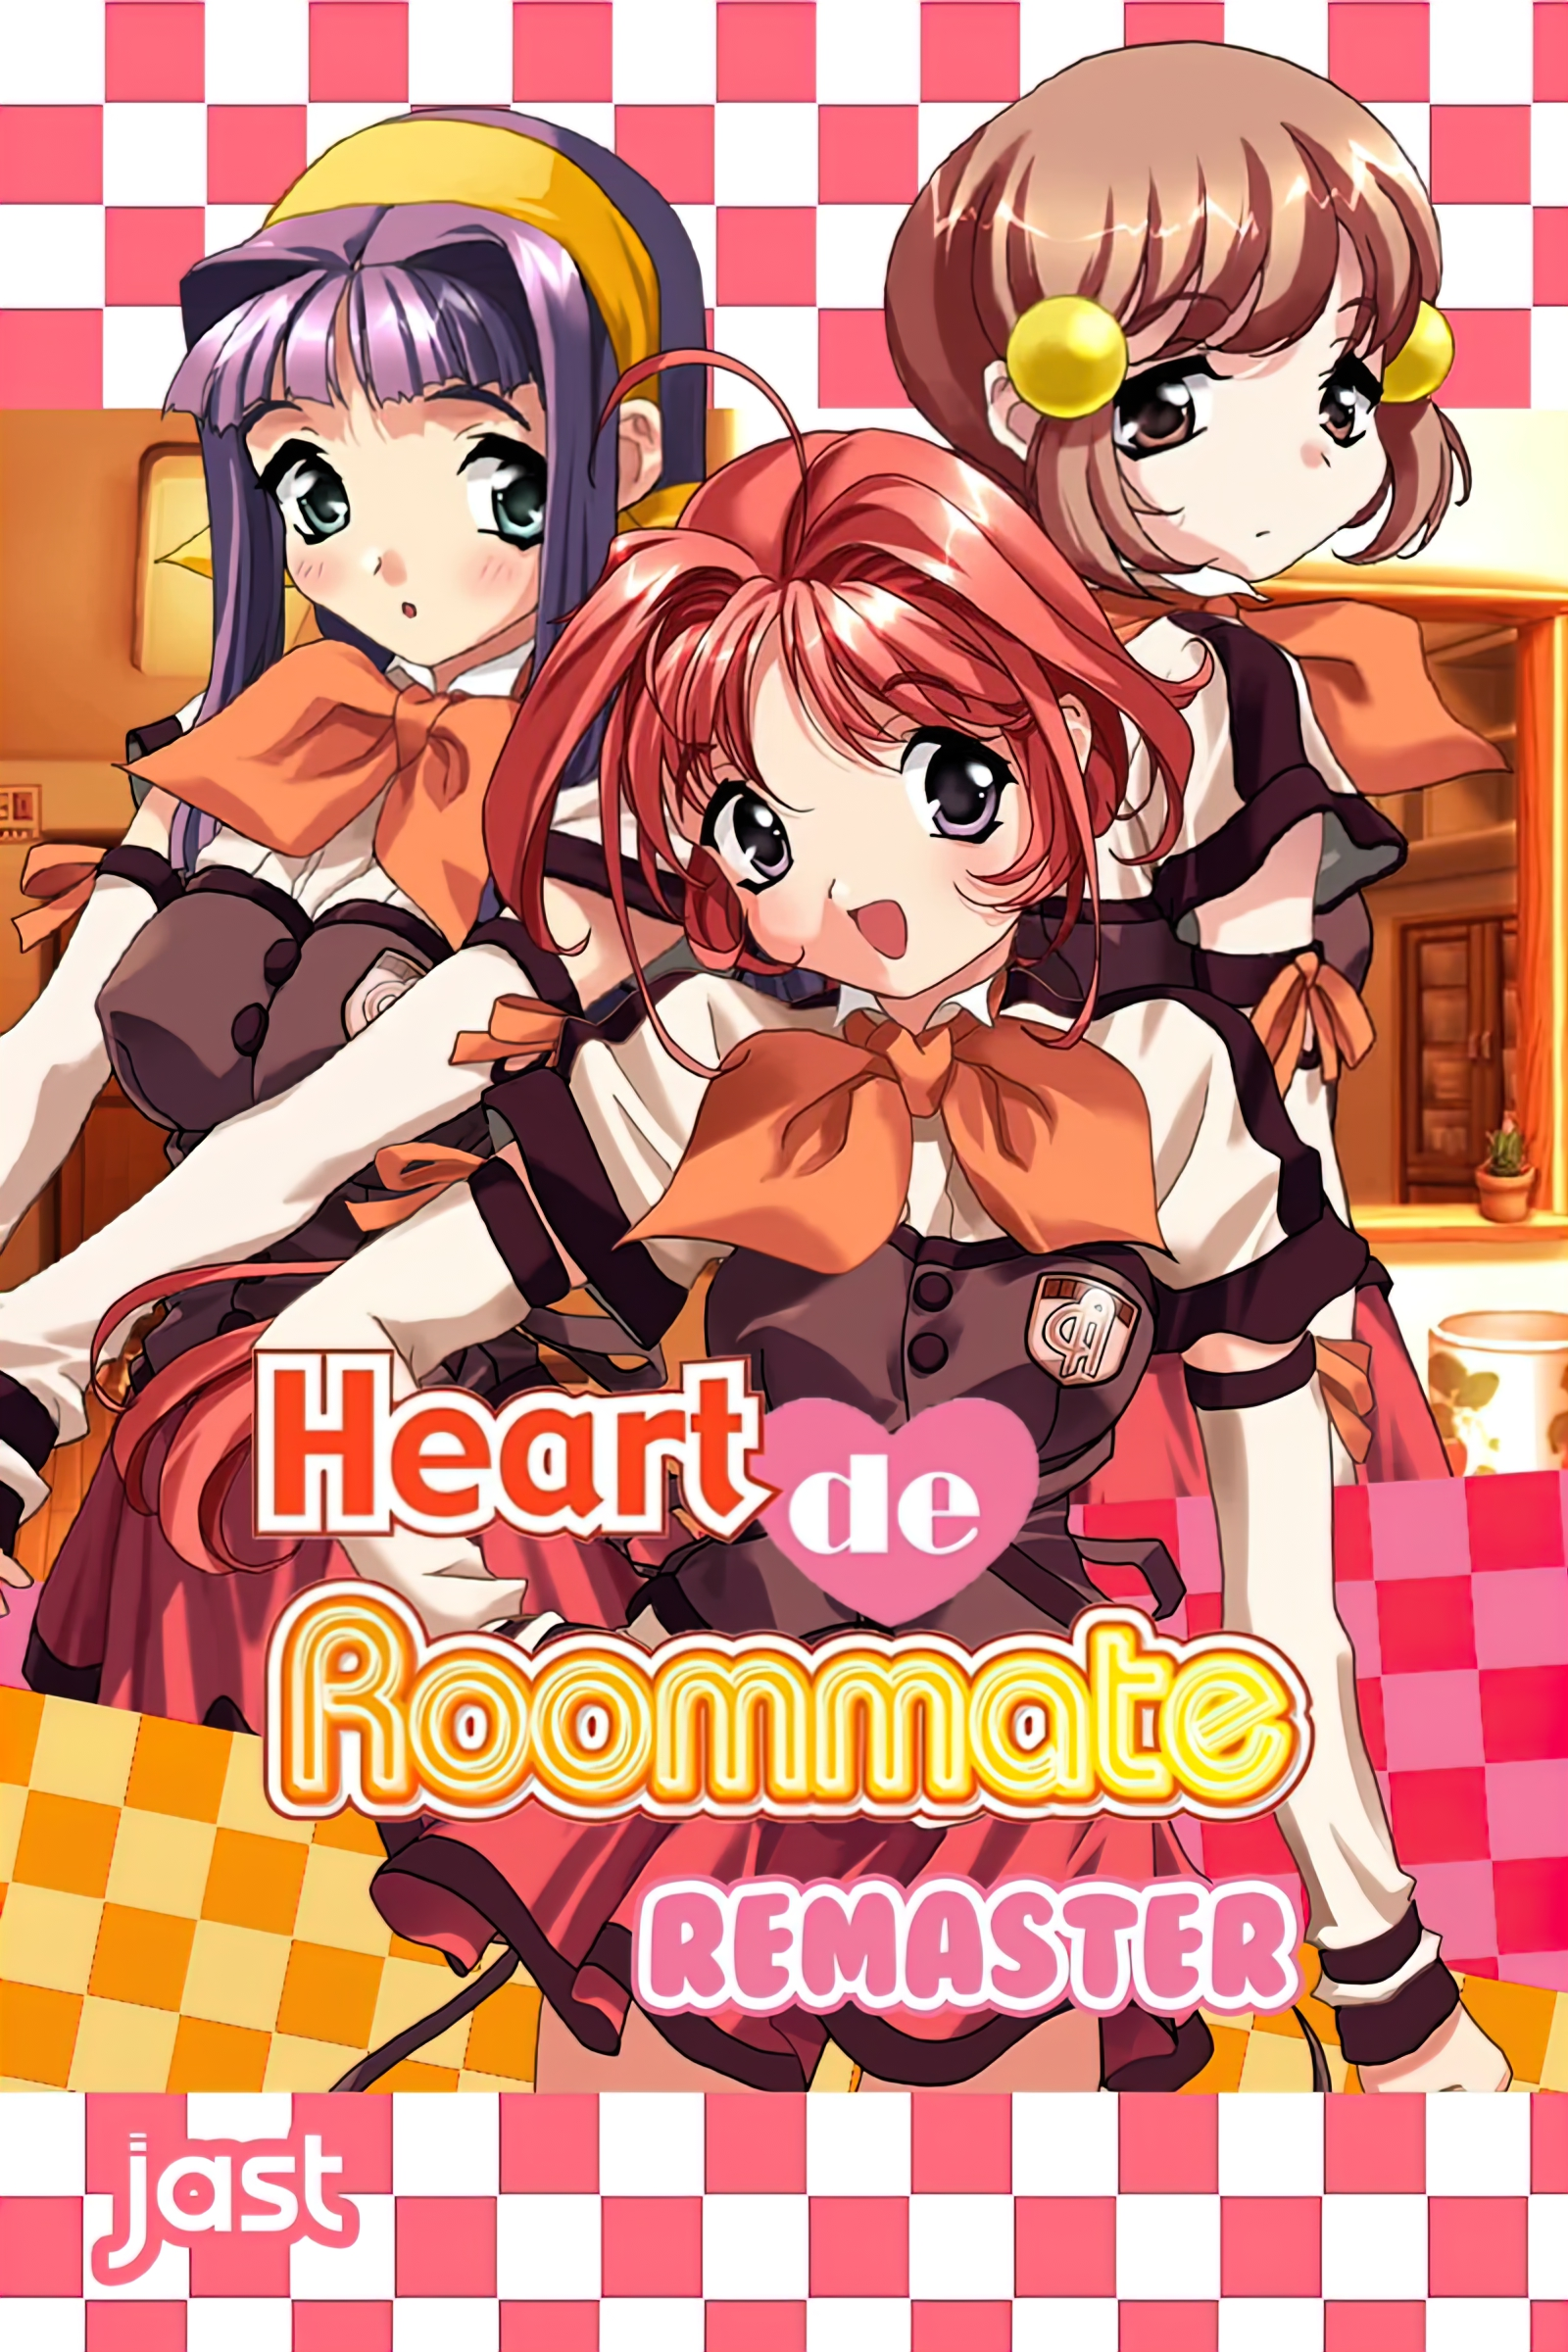 Heart de Roommate Remaster main image